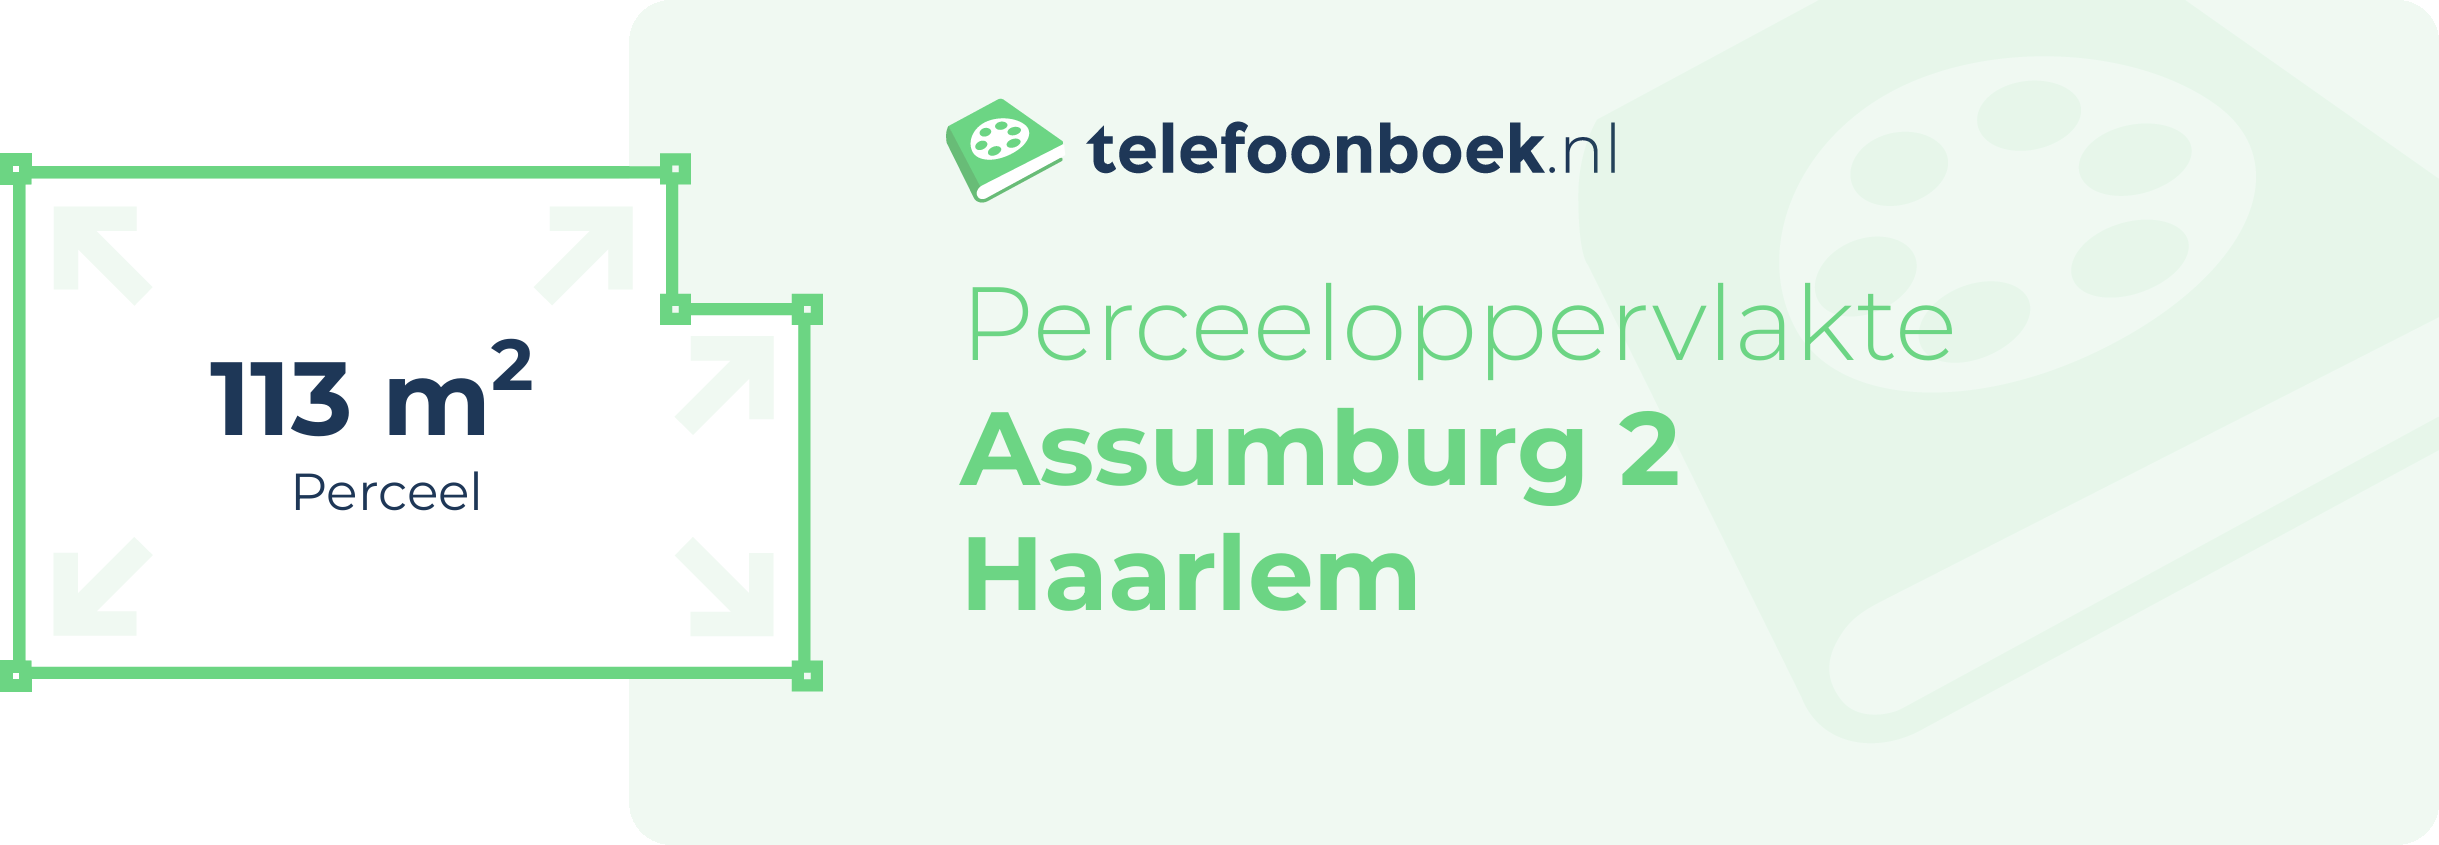 Perceeloppervlakte Assumburg 2 Haarlem